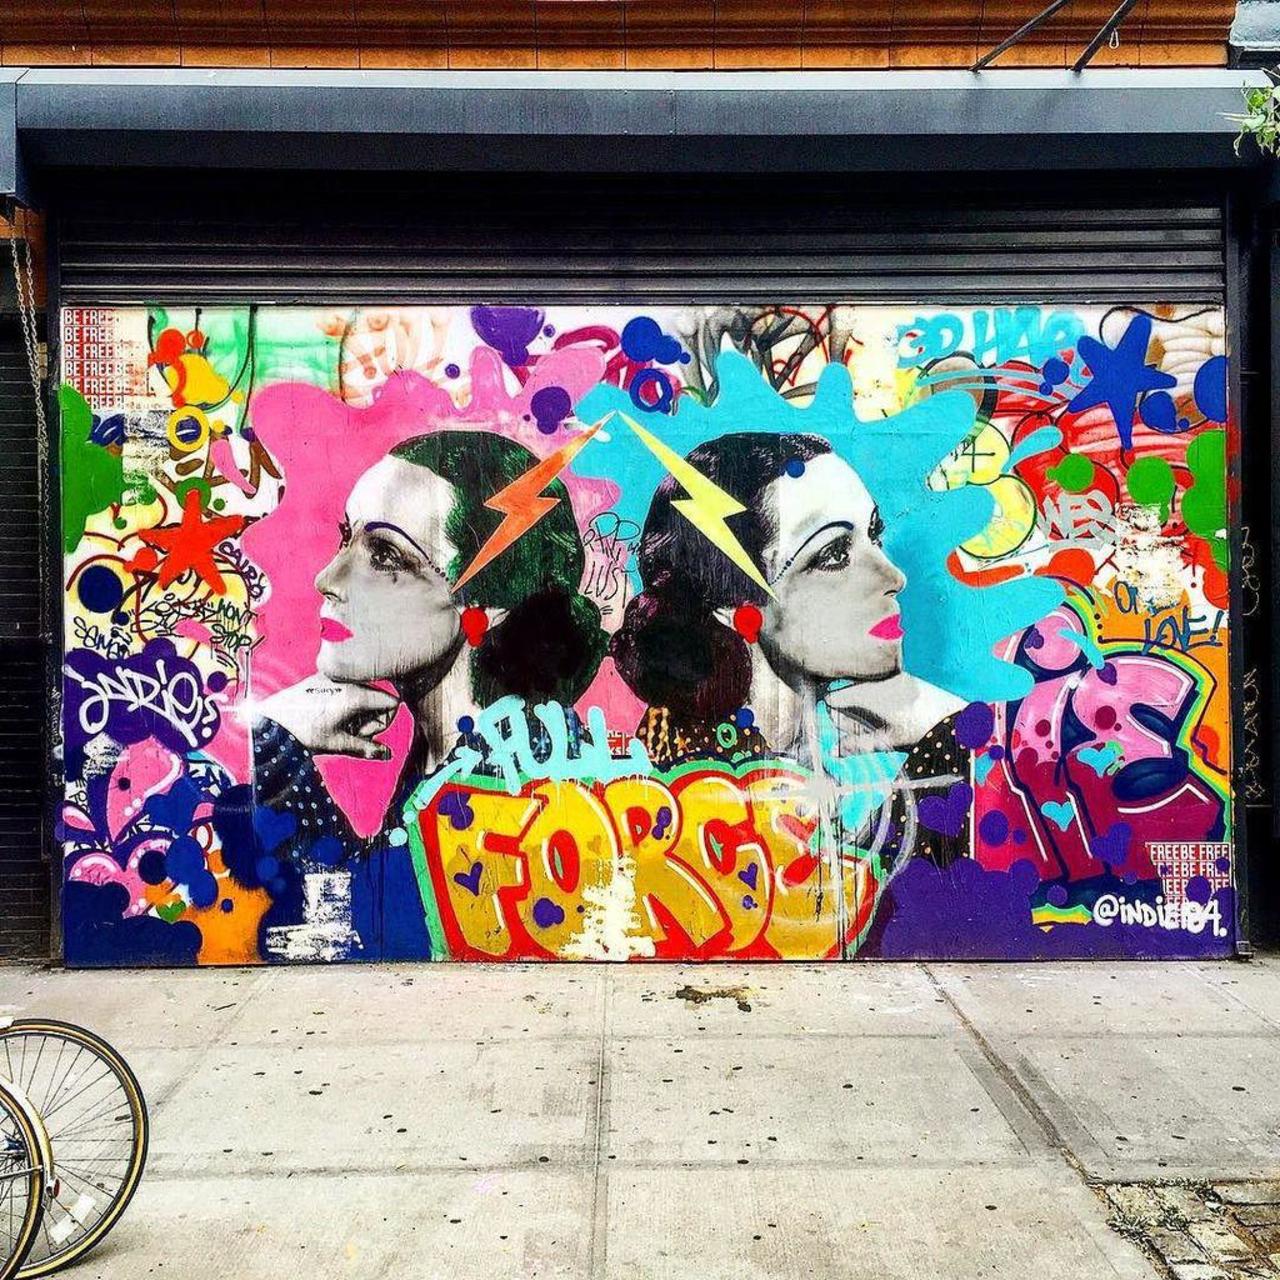 RT @StArtEverywhere: Nice rollgate art/mural by @indie184 
#murals #muralart #streetart #streetartnyc #sidewalkart #urbanart #graffiti #… http://t.co/8NloqD8zTg